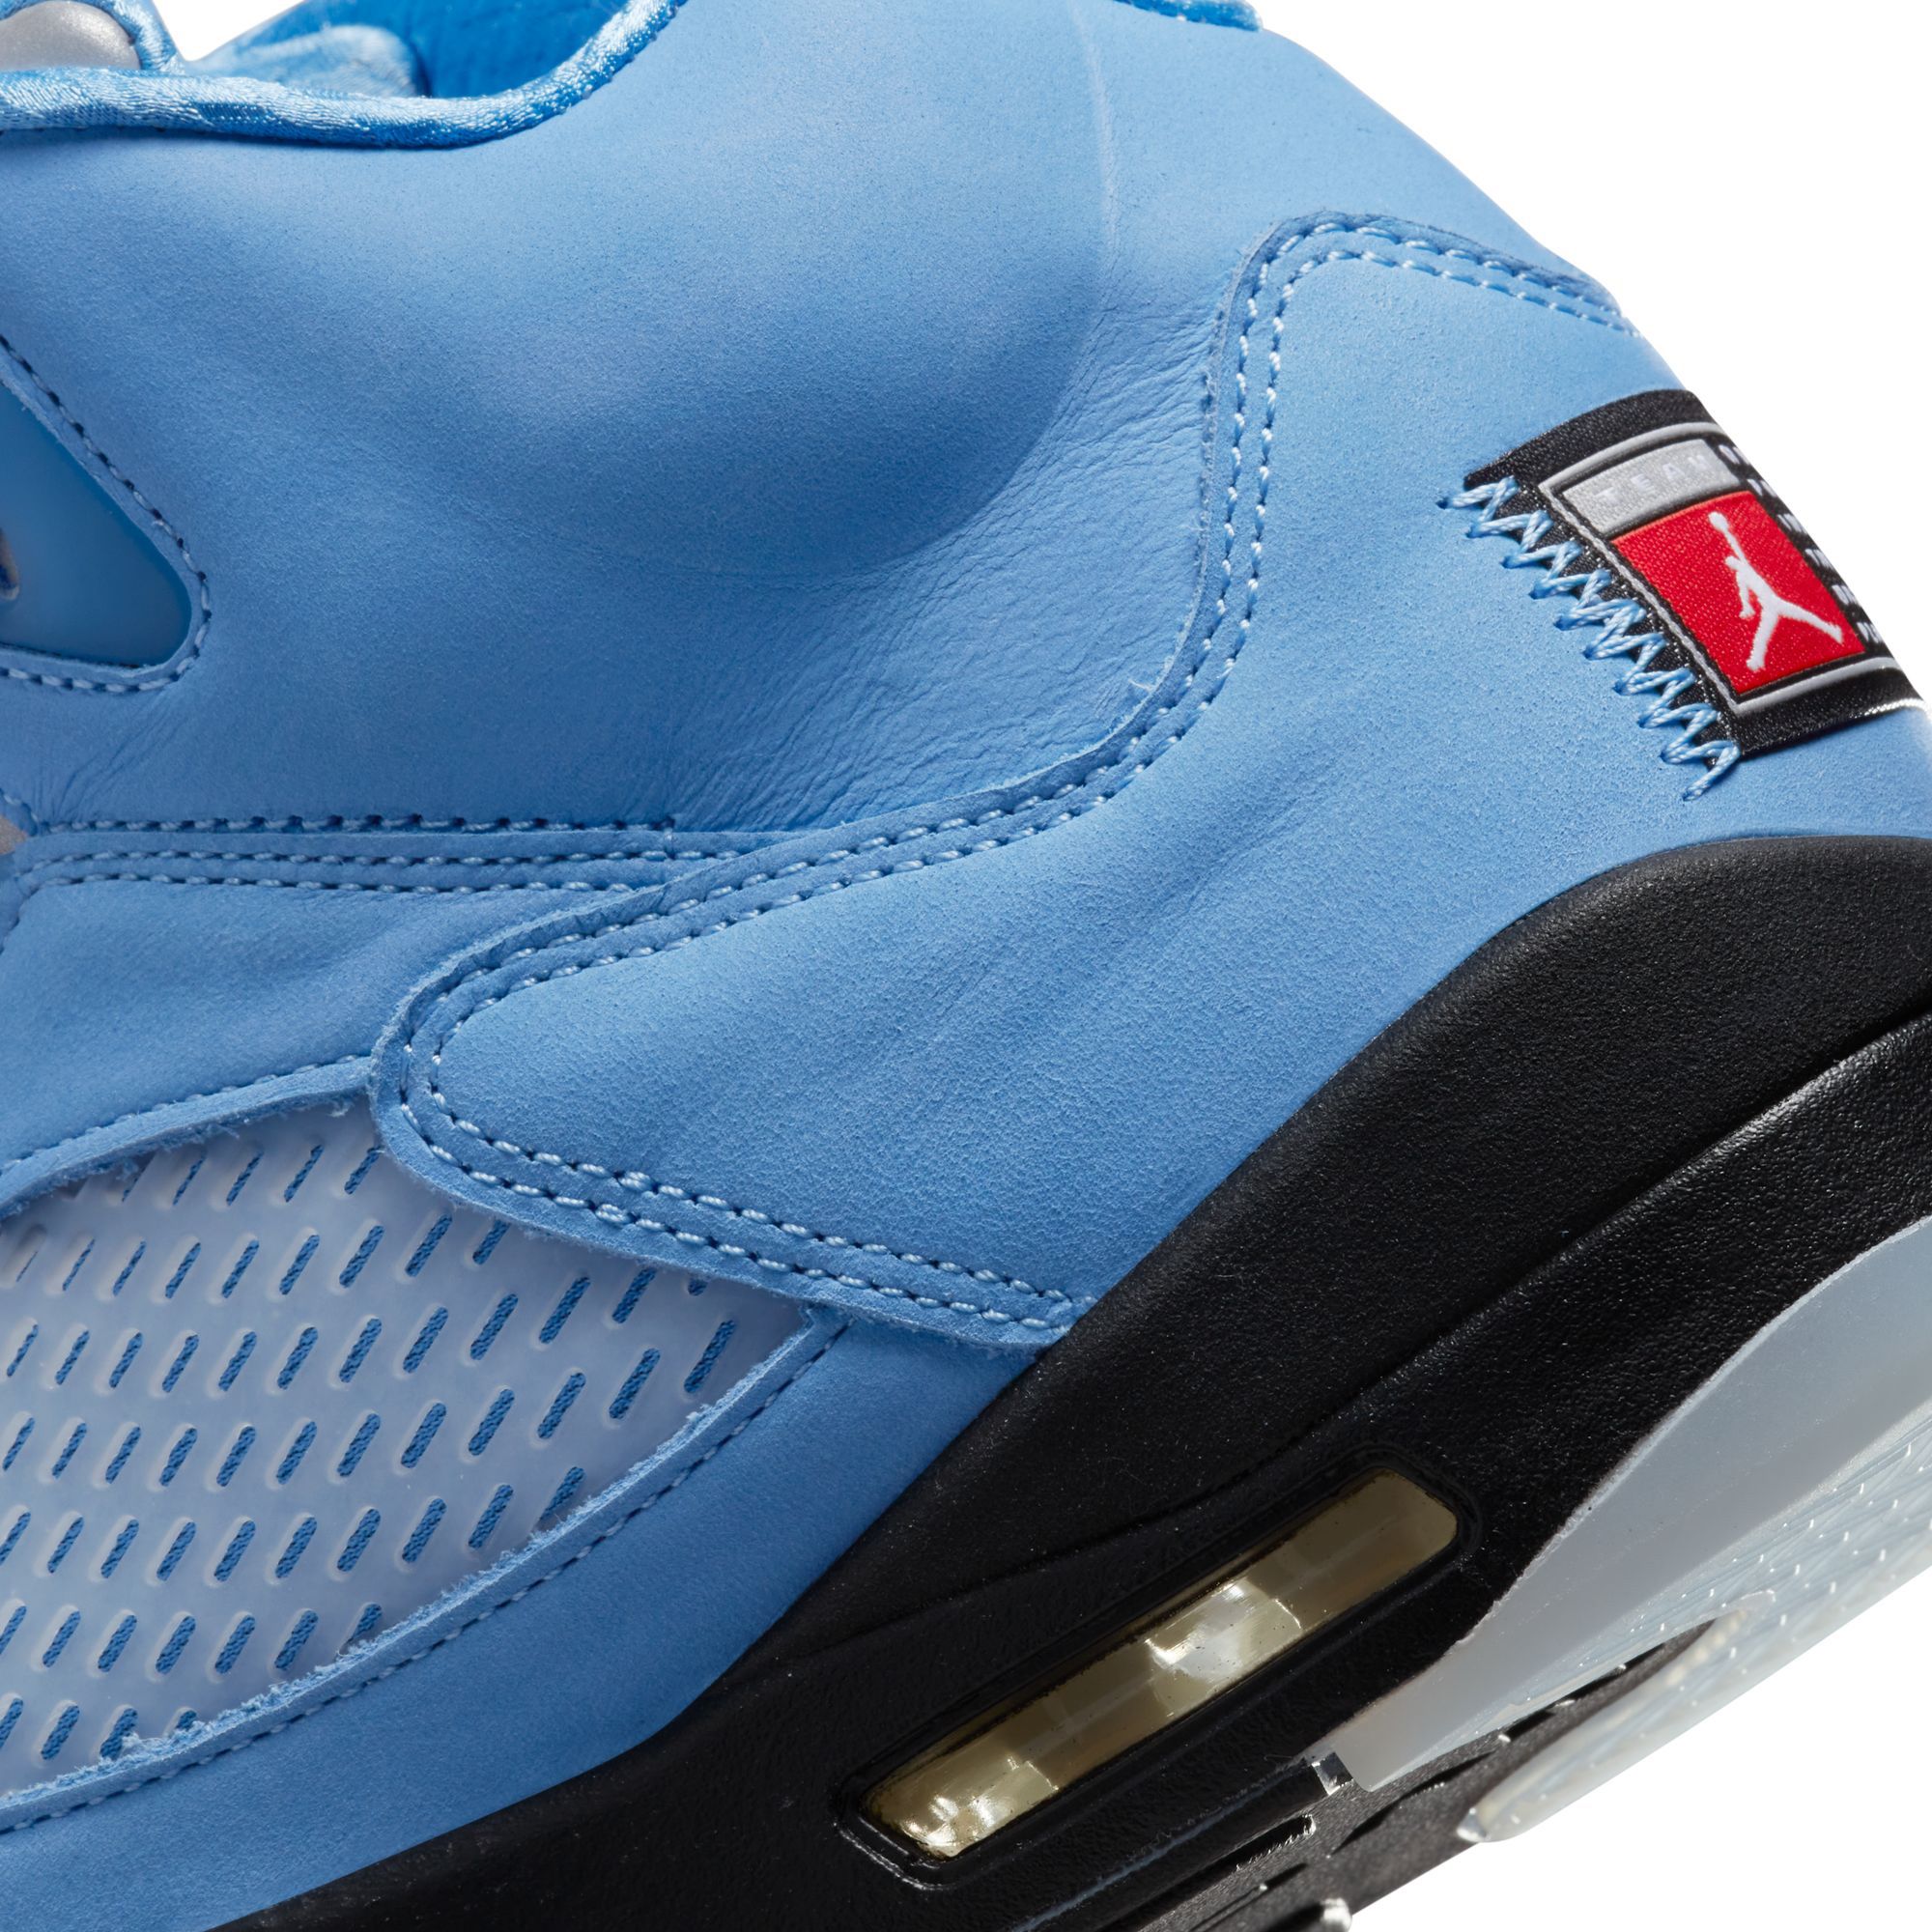 Size 9.5 Air Jordan 5 Retro UNC University Blue Men's Style DV1310-401